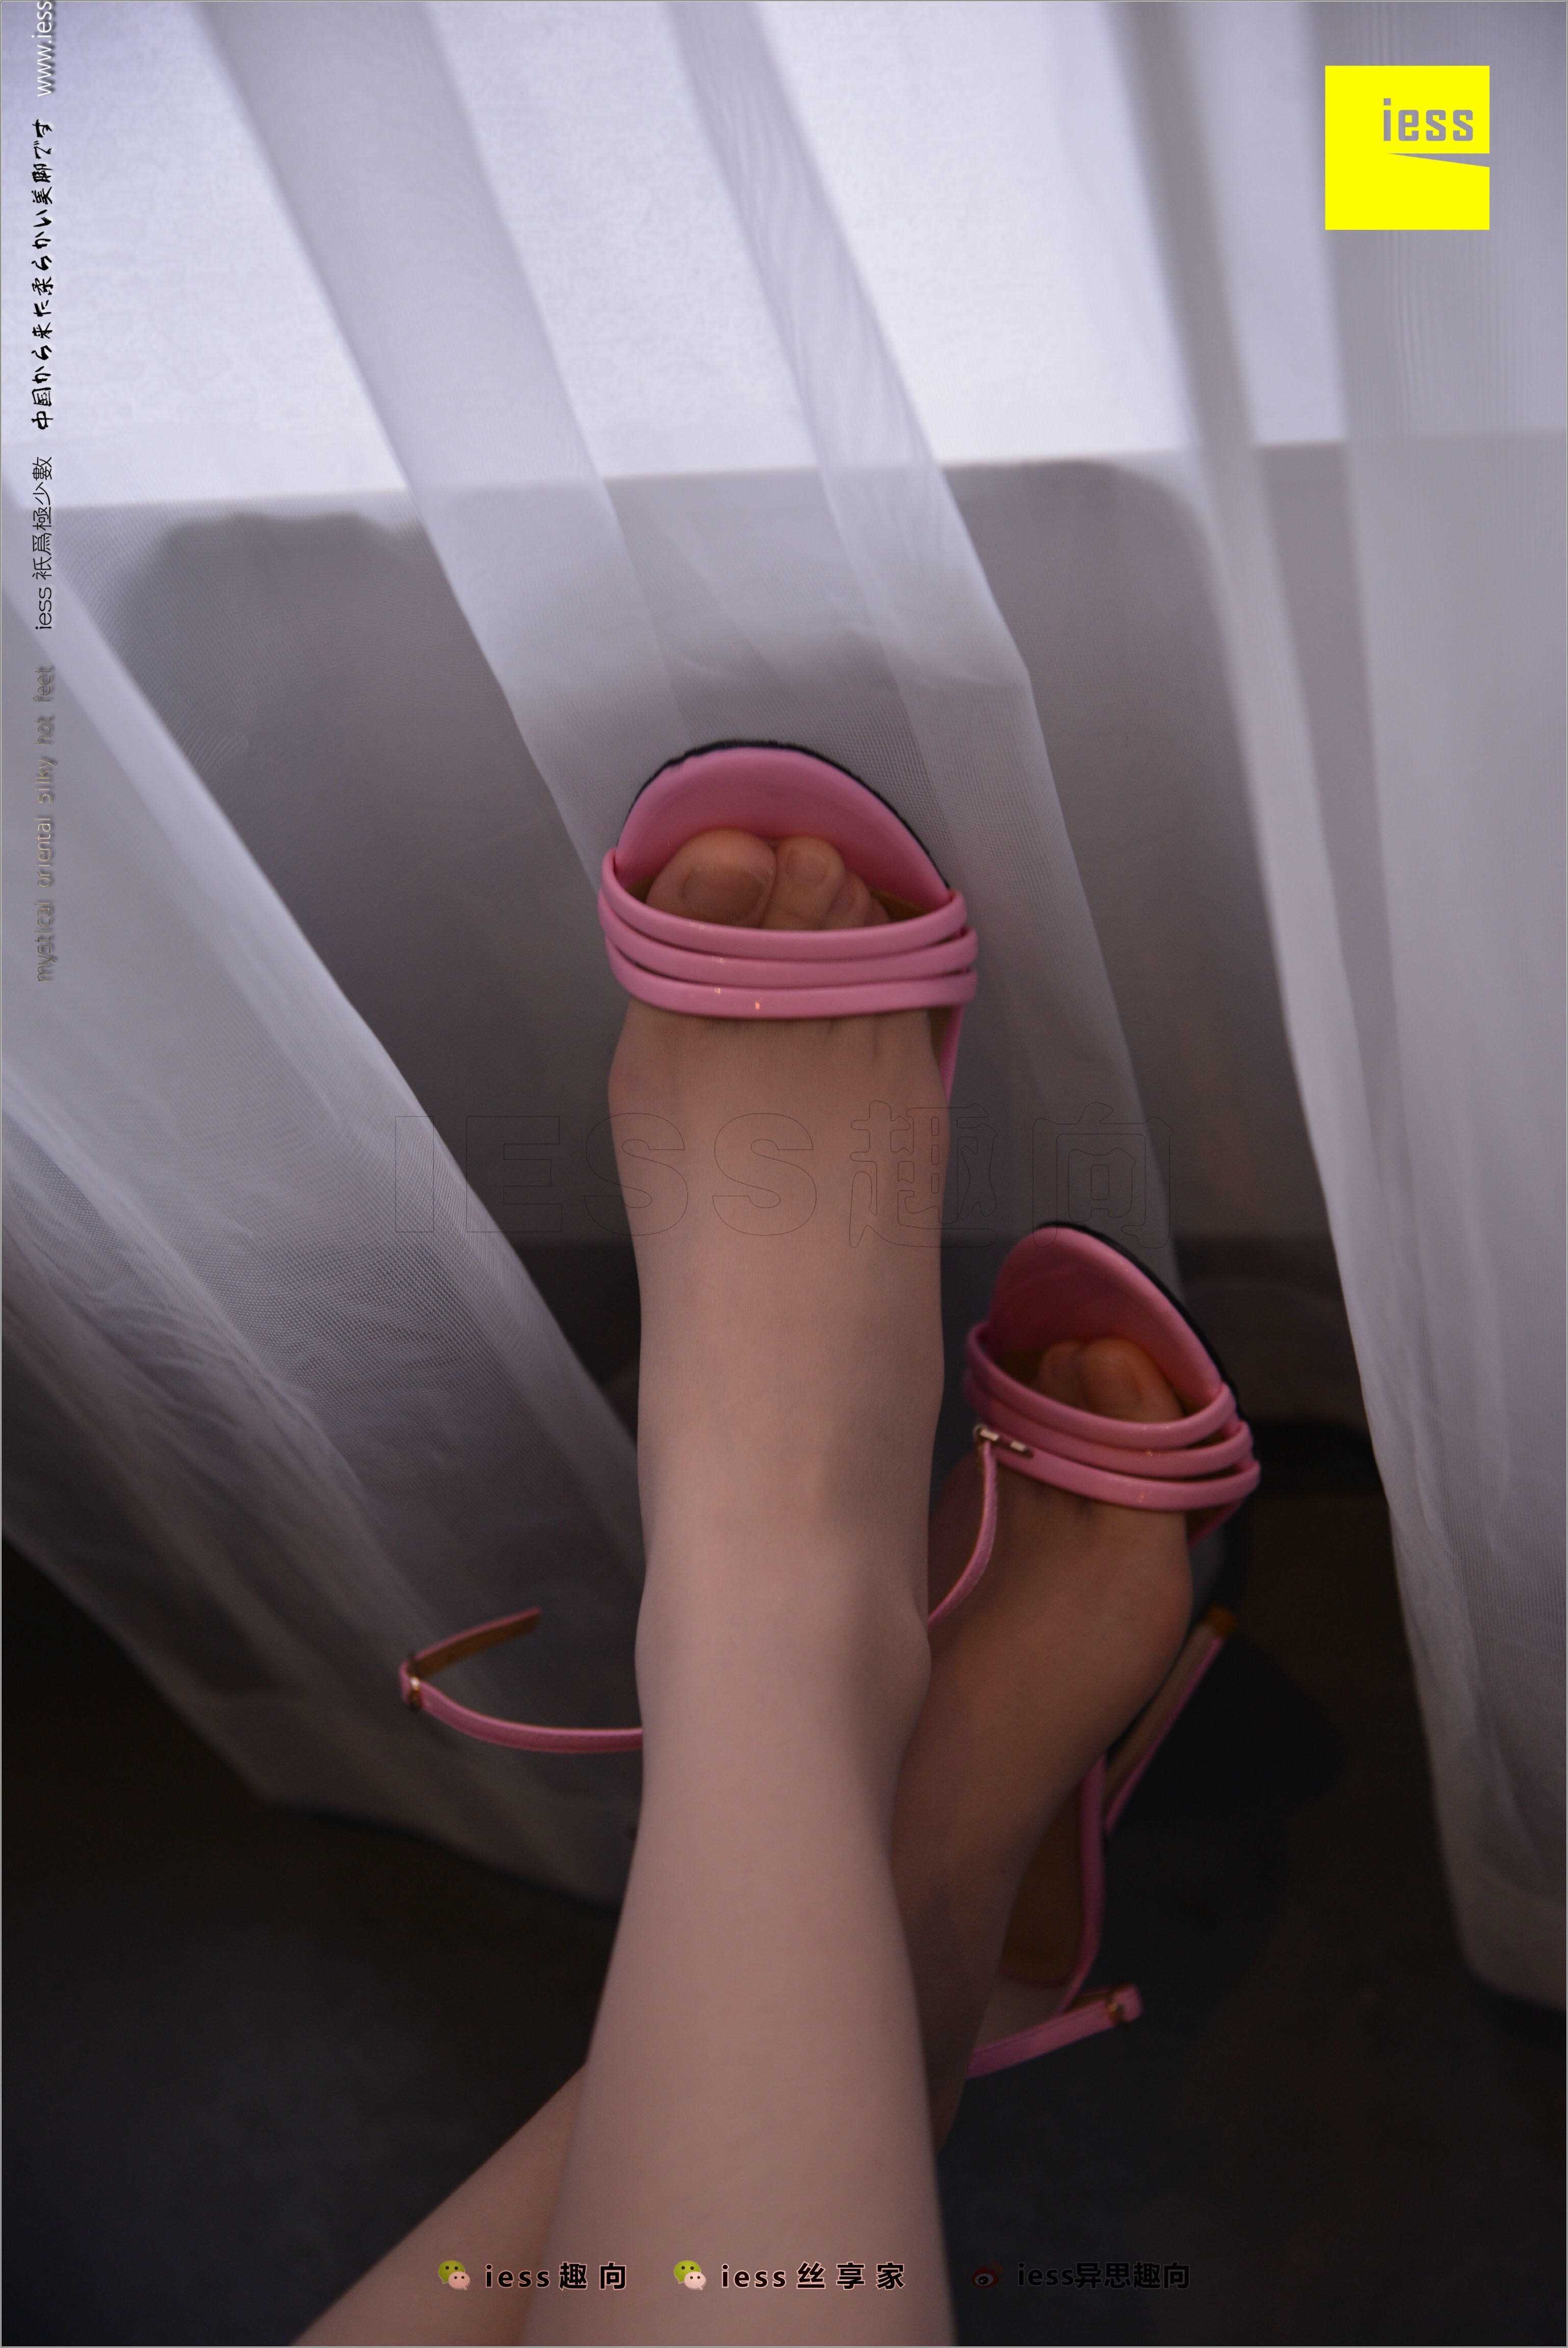 China Beauty Legs and feet 483